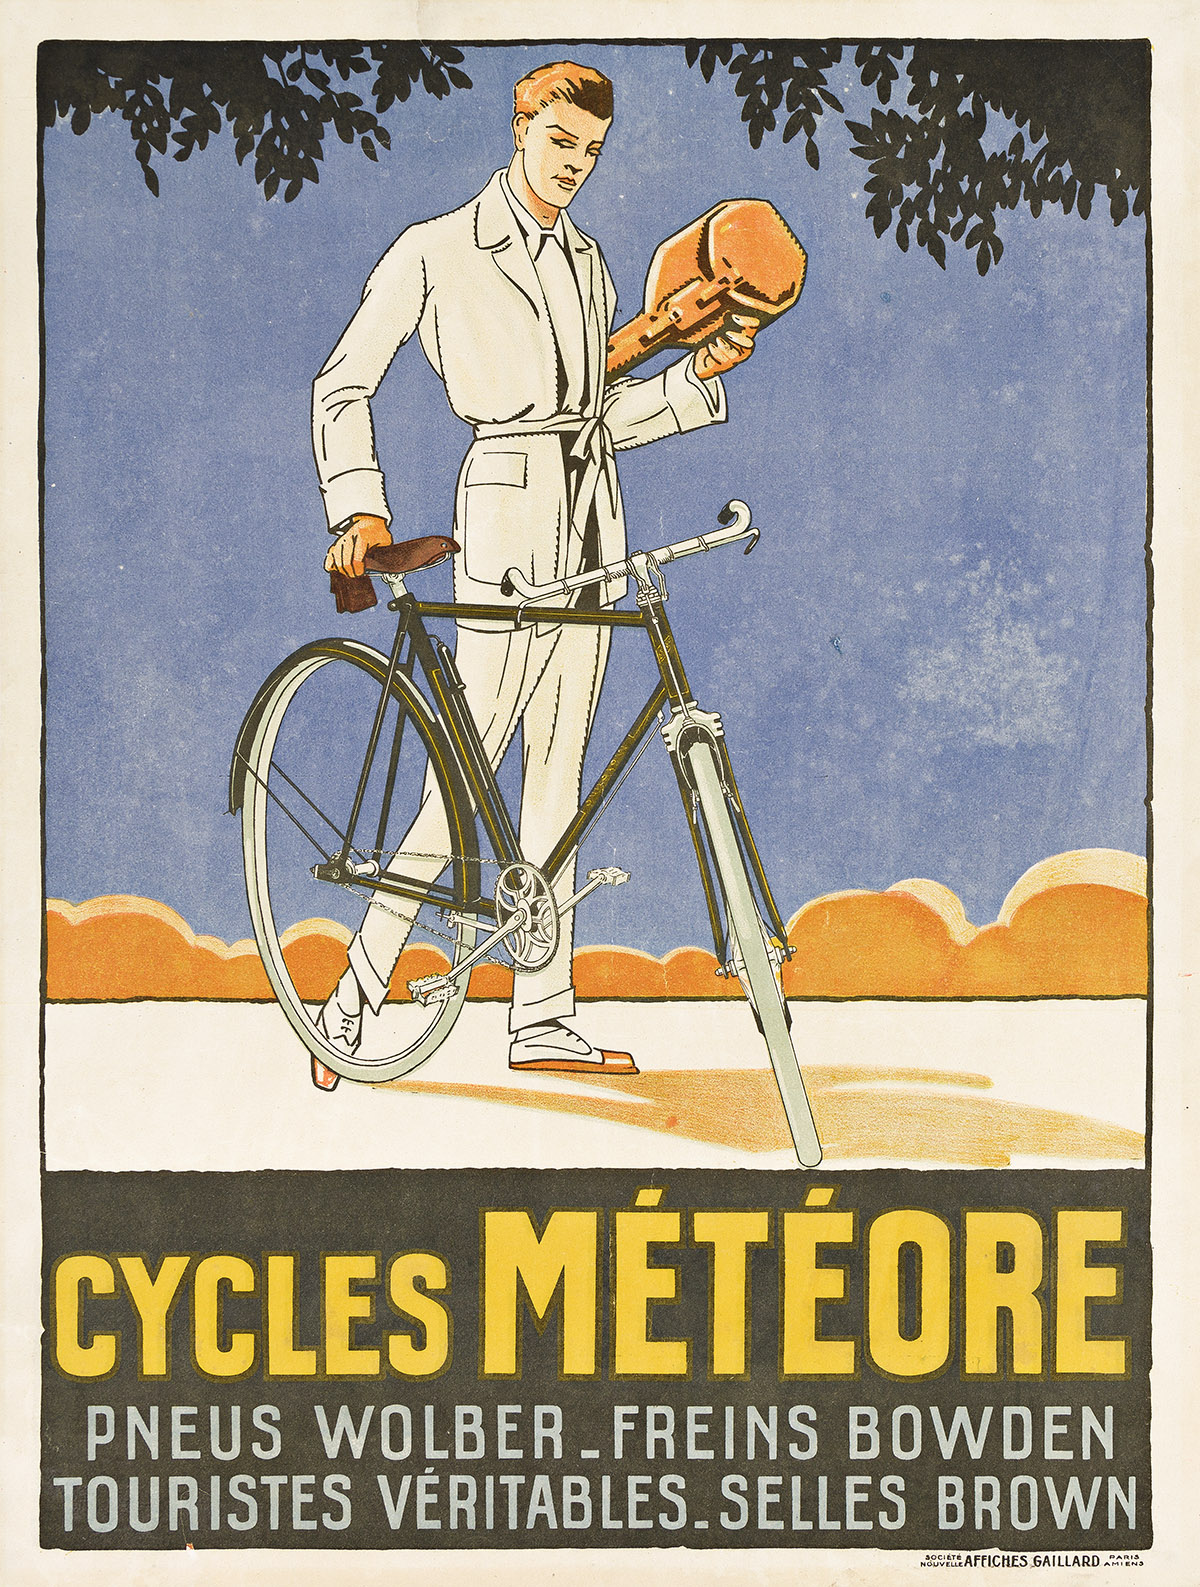 DESIGNER UNKNOWN. CYCLES MÉTÉORE / PNEUS WOLBER. 1926. 30¾x23 inches, 78x58½ cm. Affiches Gaillard, Paris.